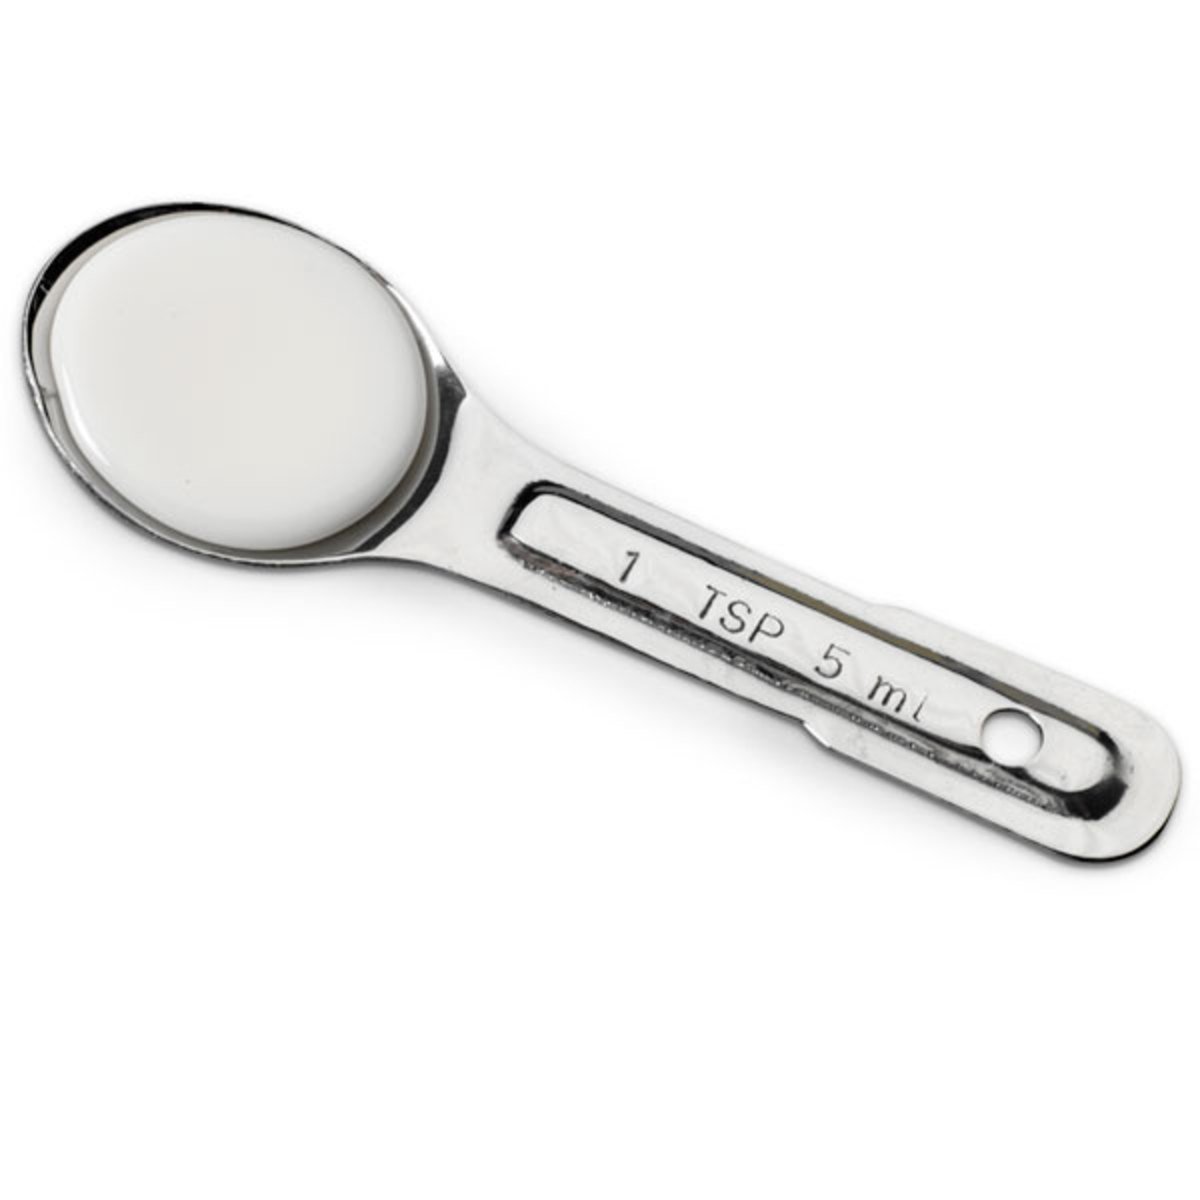 1 tablespoon measure